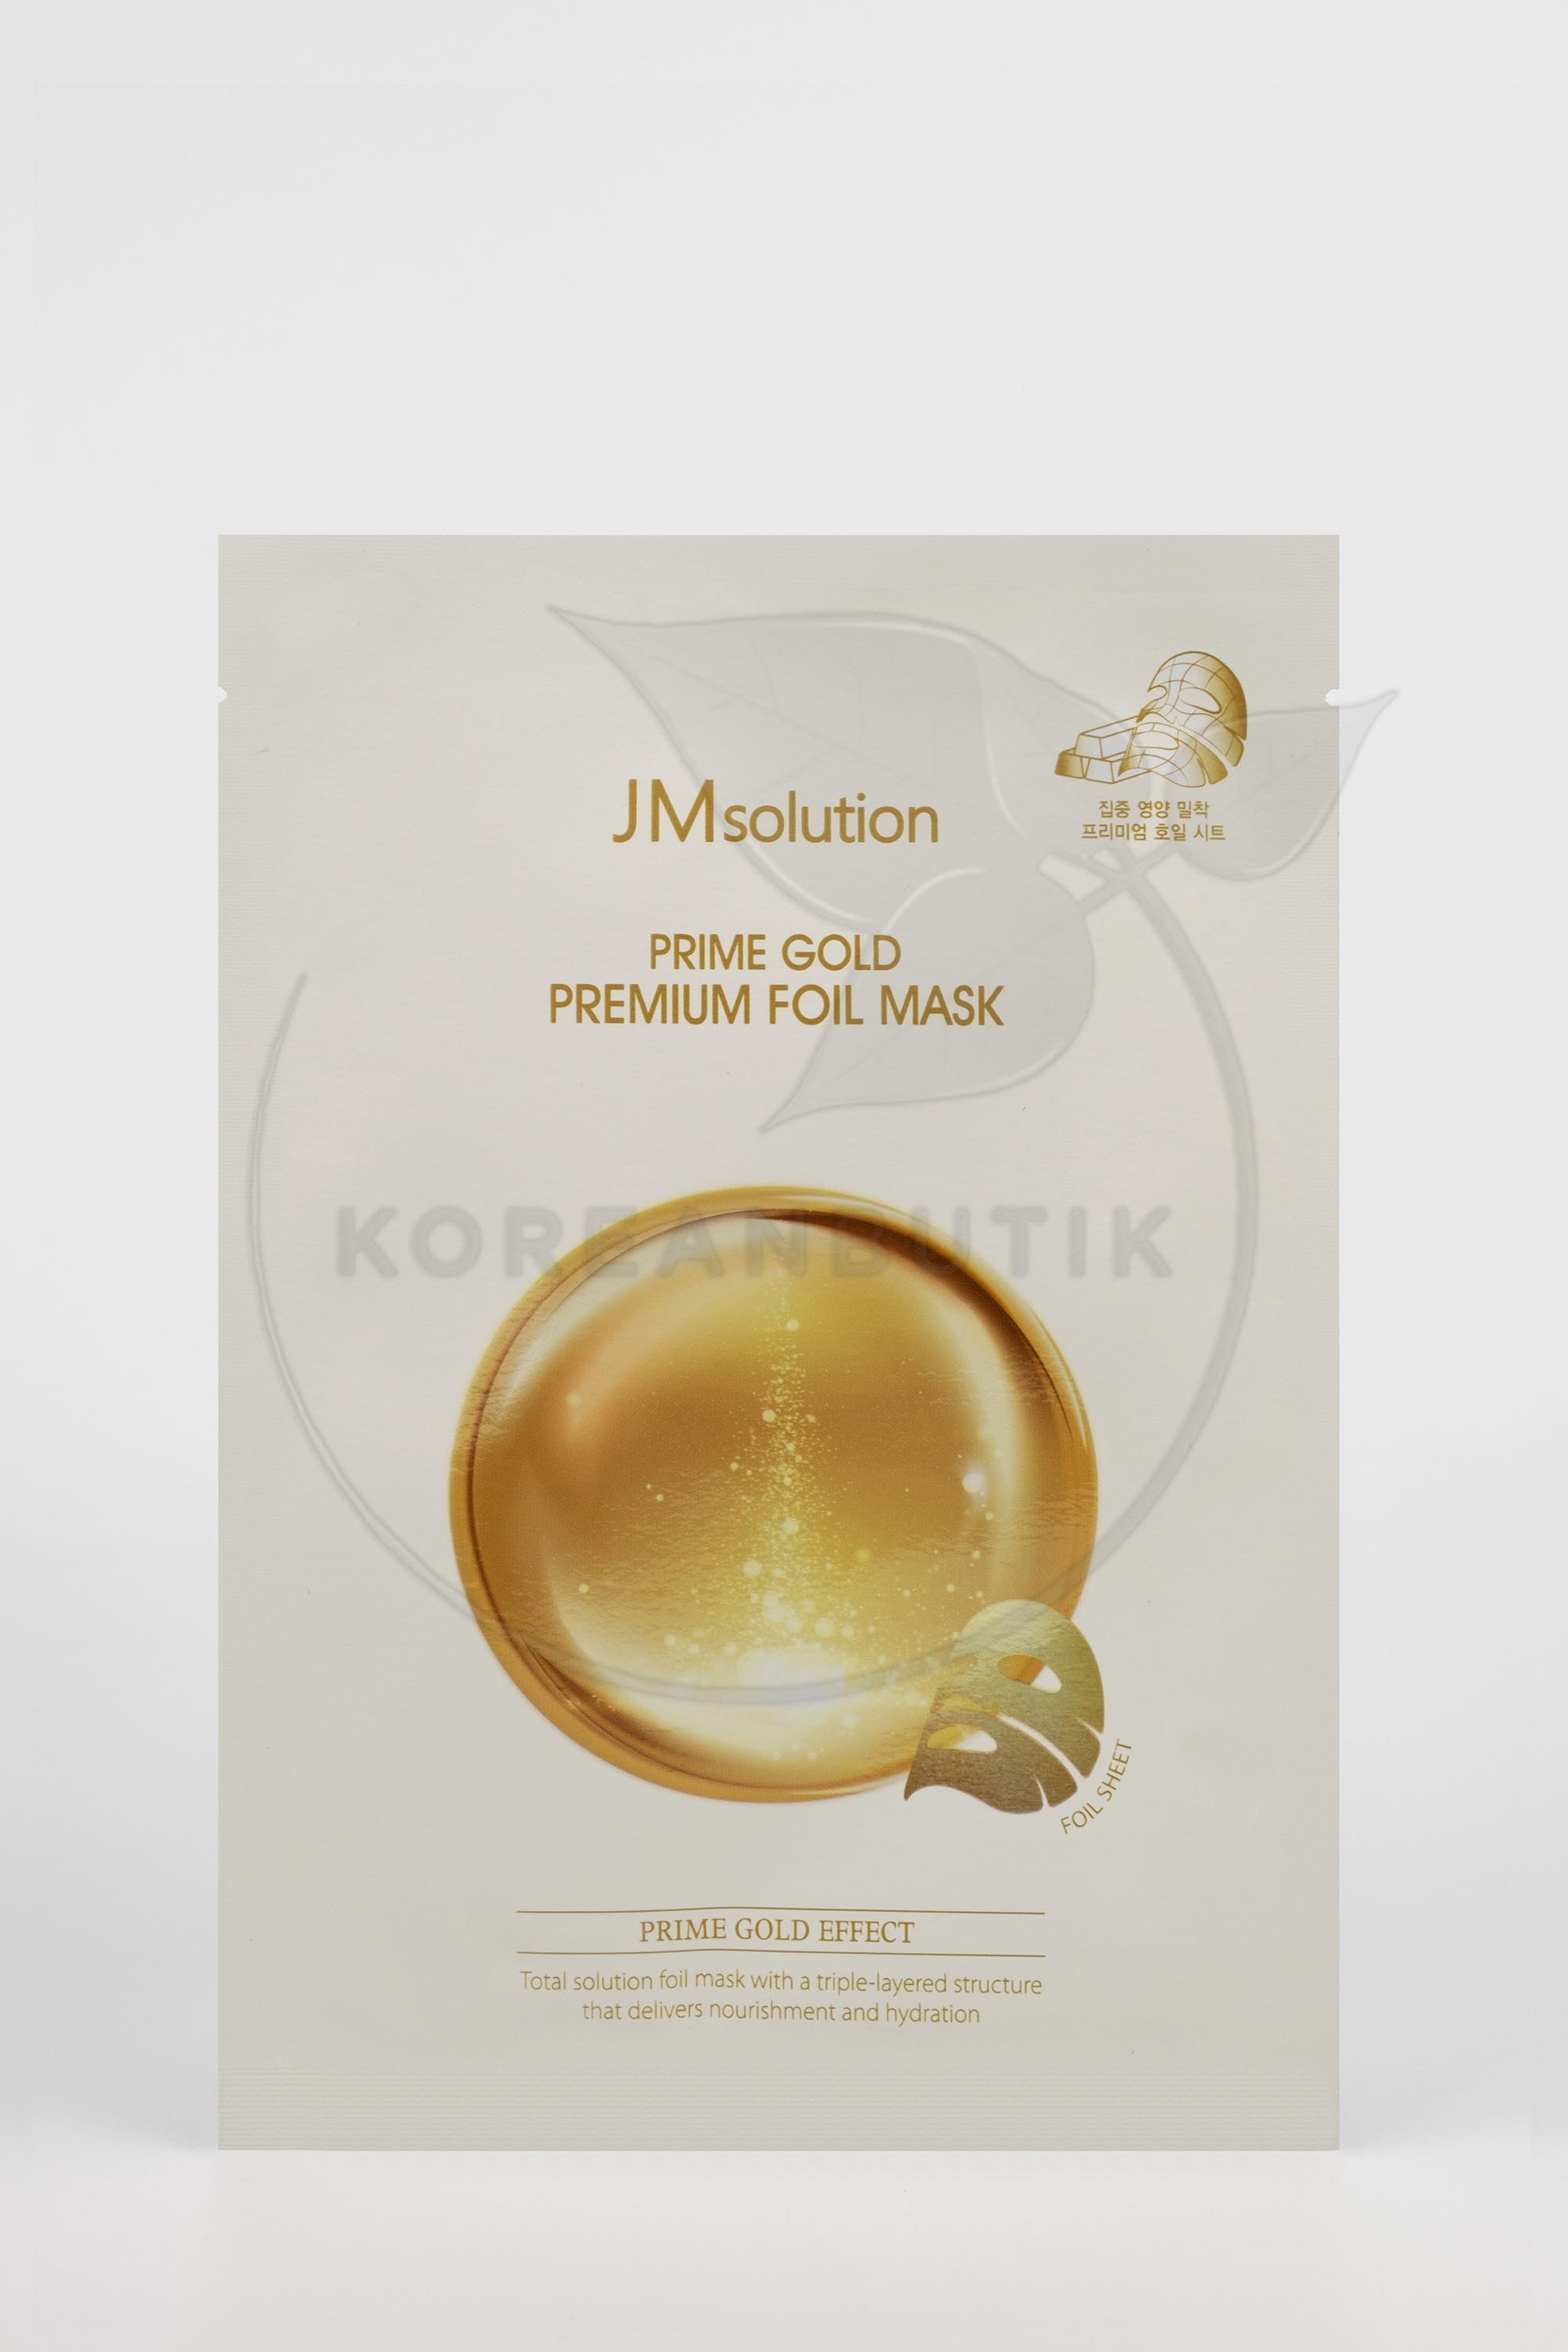  JMsolution PRIME GOLD PREMIUM FOIL..